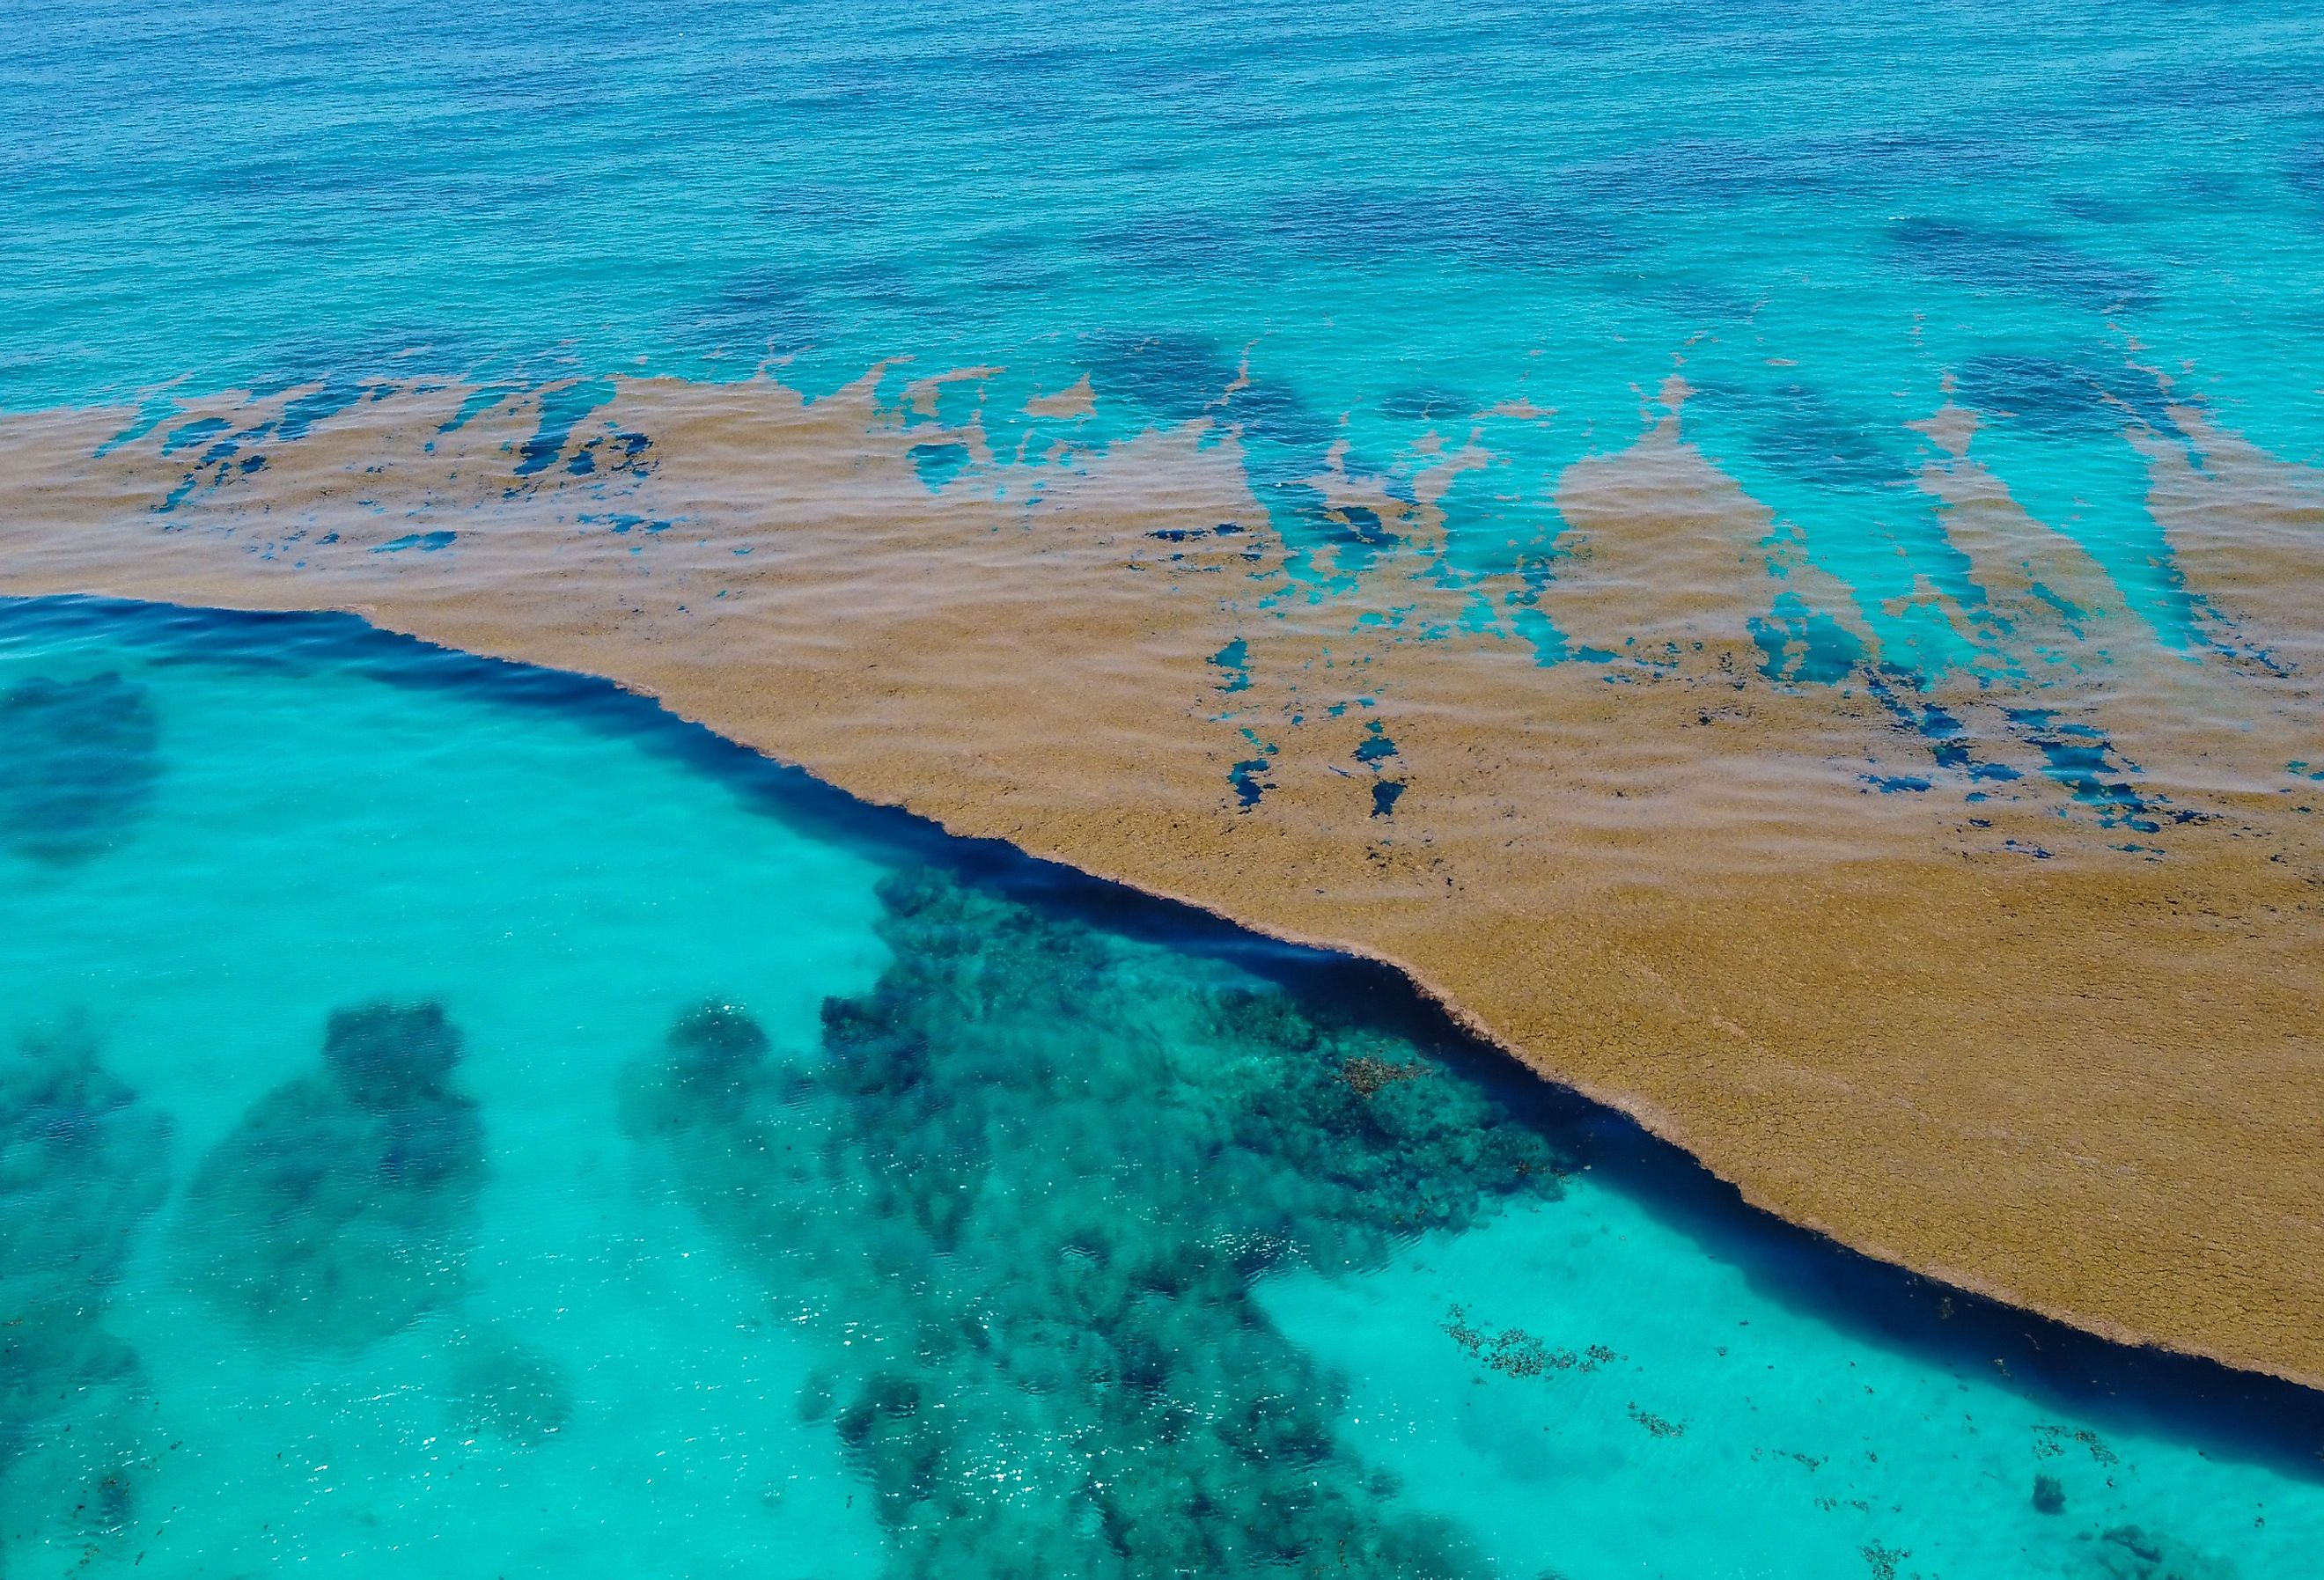 Caribbean sea covered by Sargasso algae.